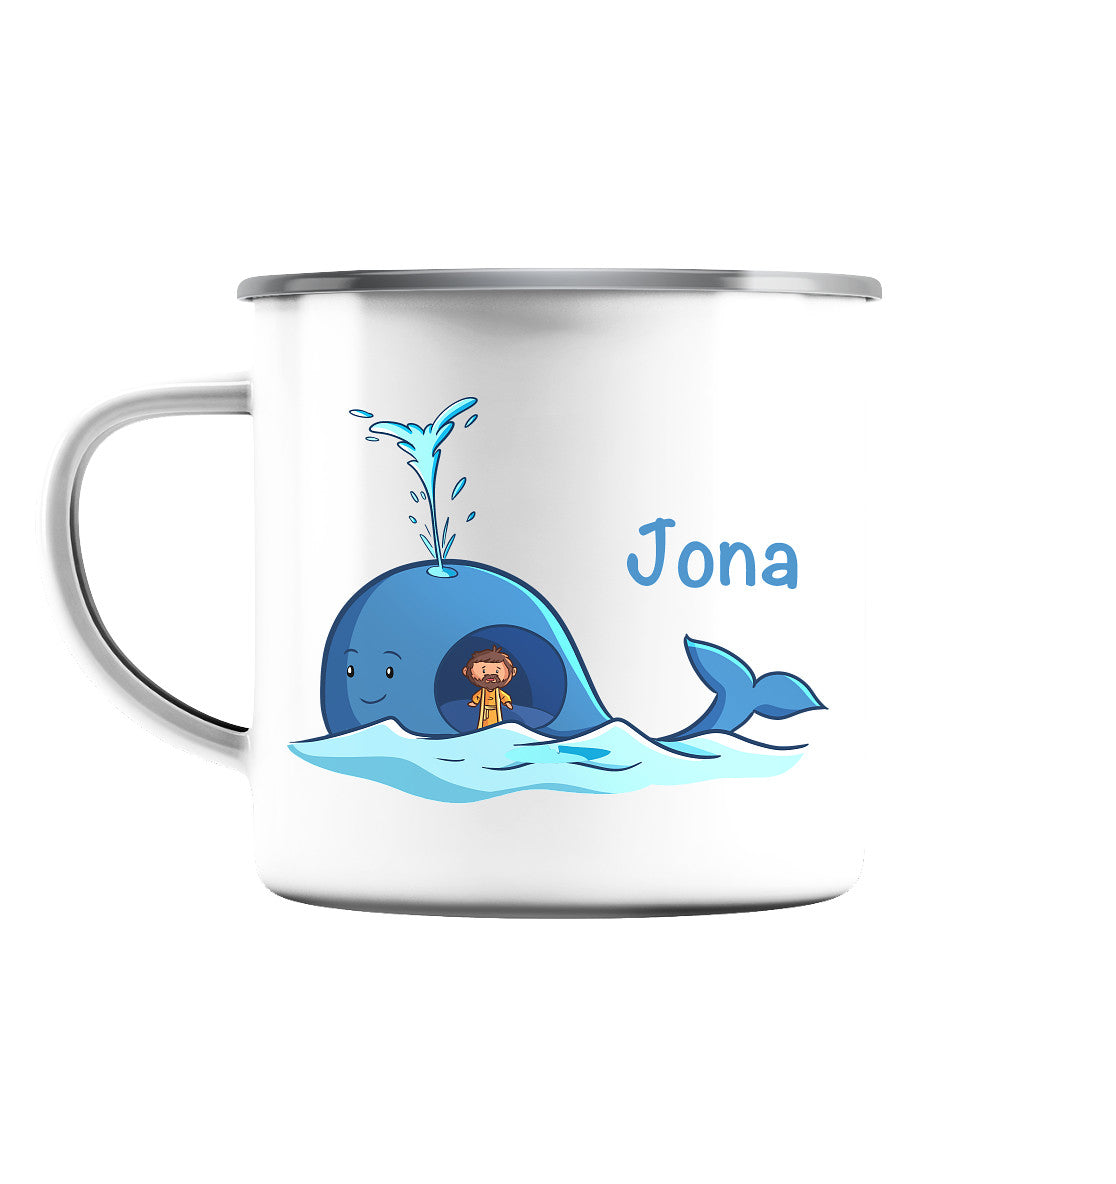 1.Mo 6-8 / Jona 1,17 - Die Noah - Jona -Tasse  - Emaille Tasse (Silber)